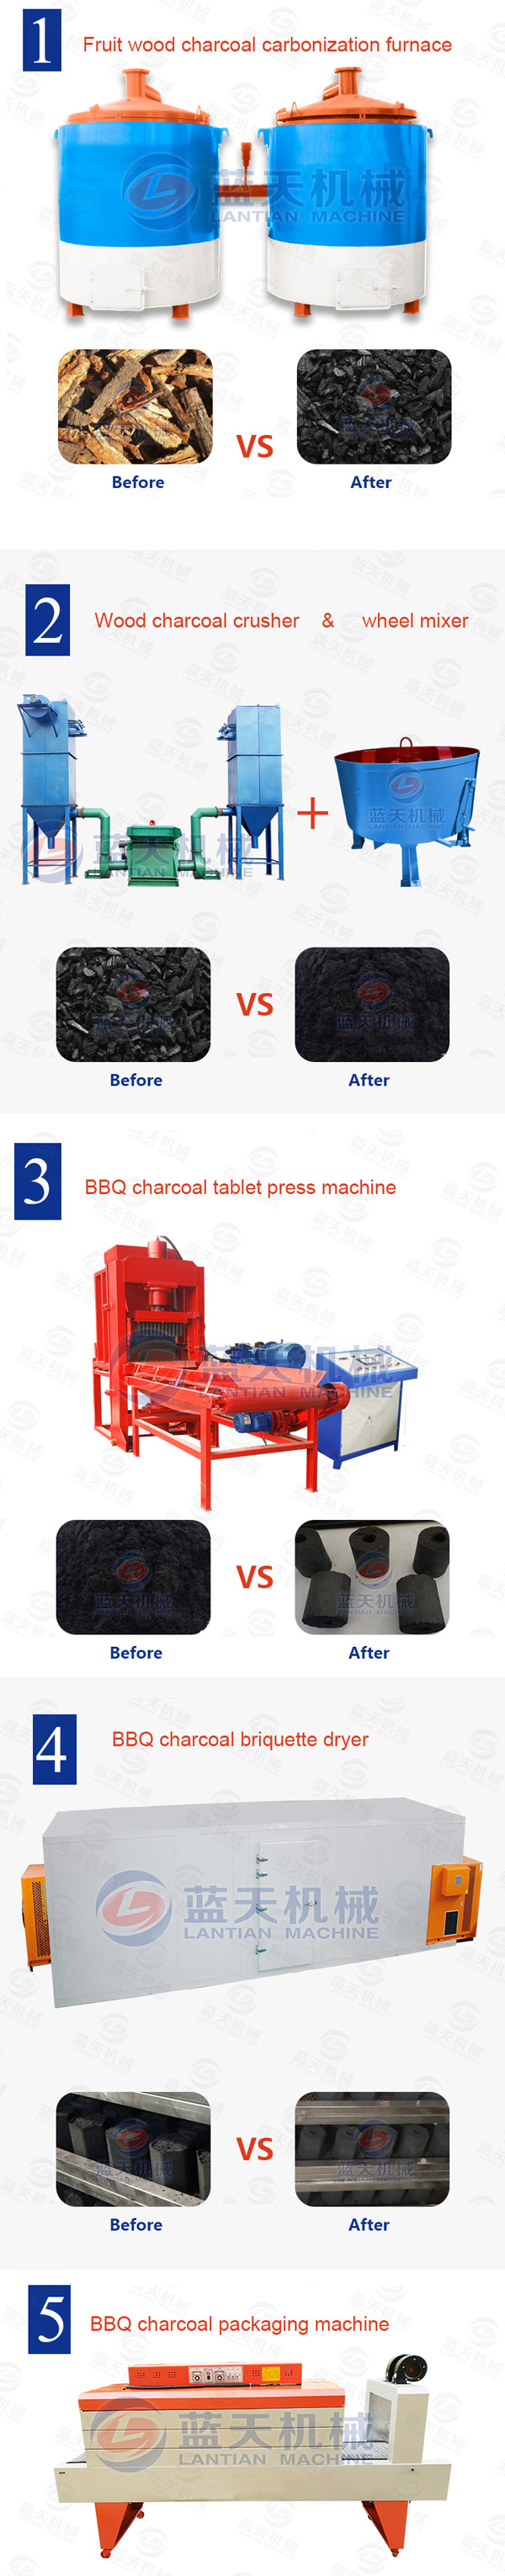 BBQ charcoal machine